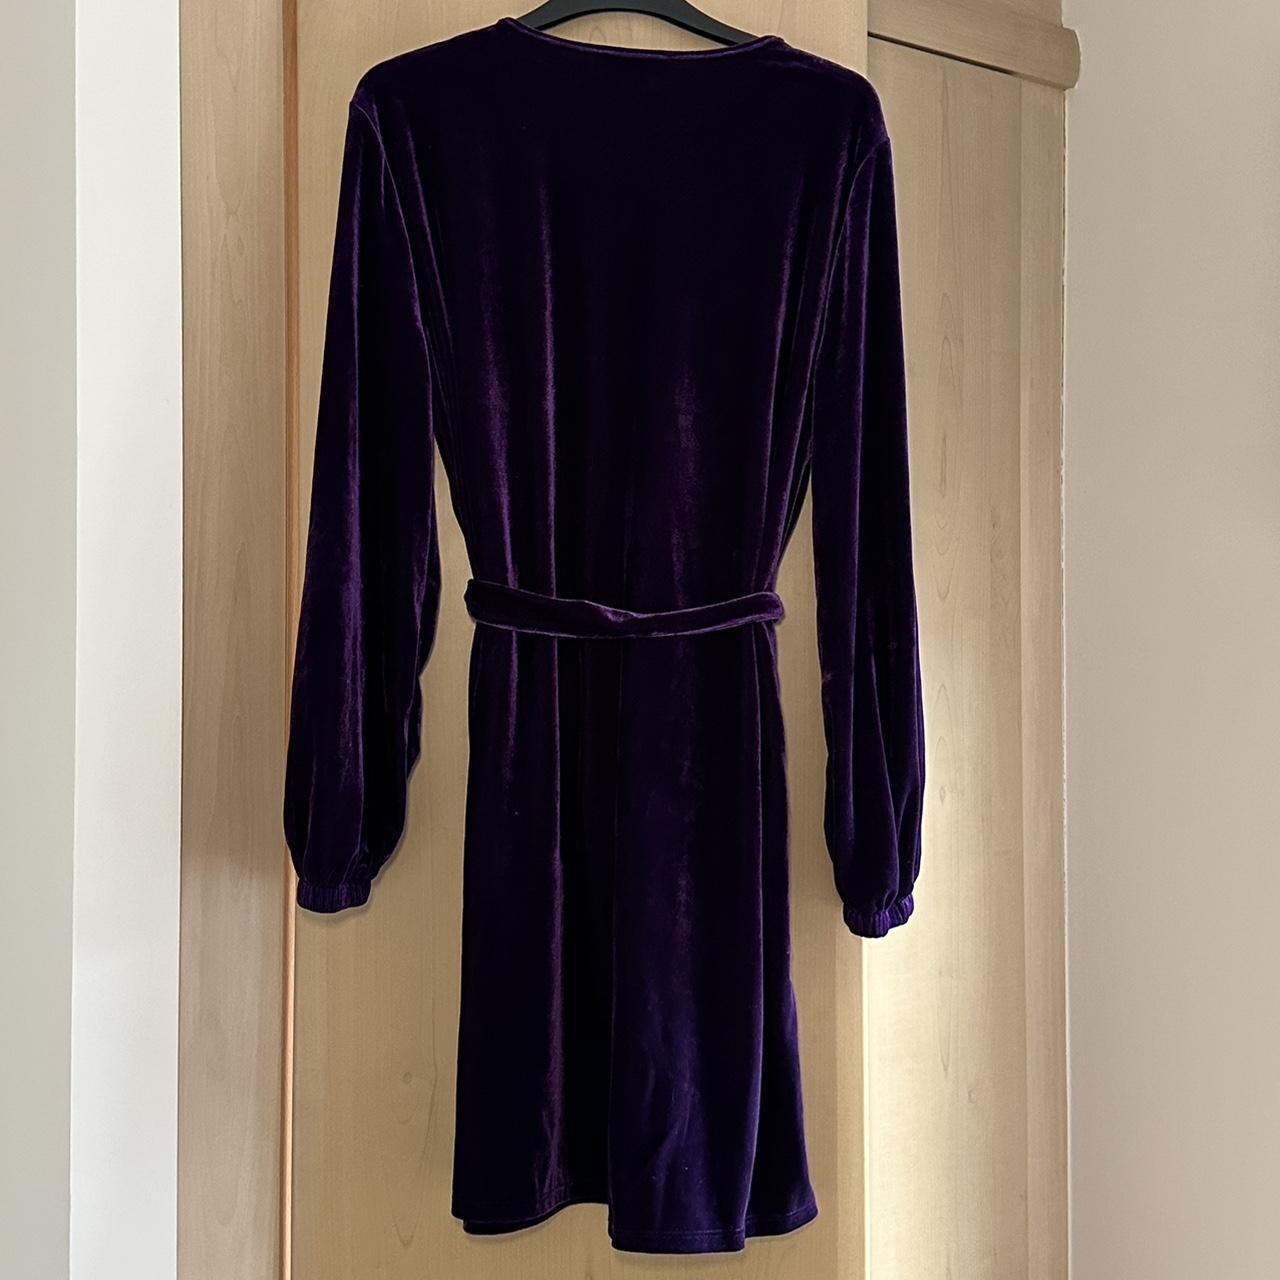 Primark Women's Purple Dress | Depop